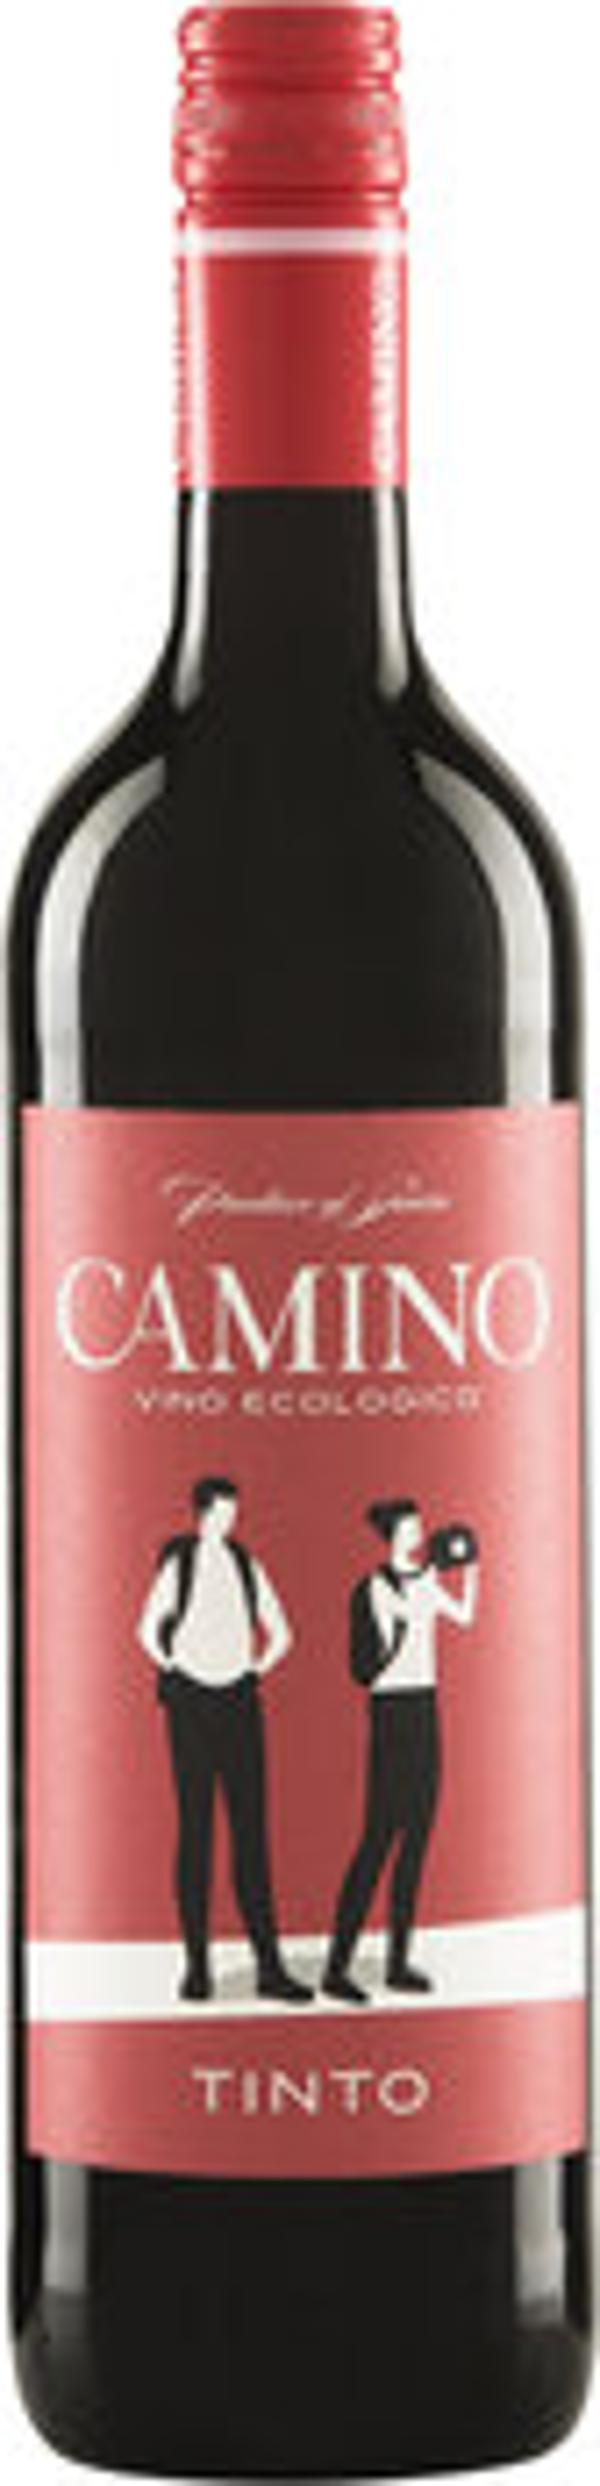 Produktfoto zu Wein Camino Tinto, Tempranillo, 0,75L, trocken